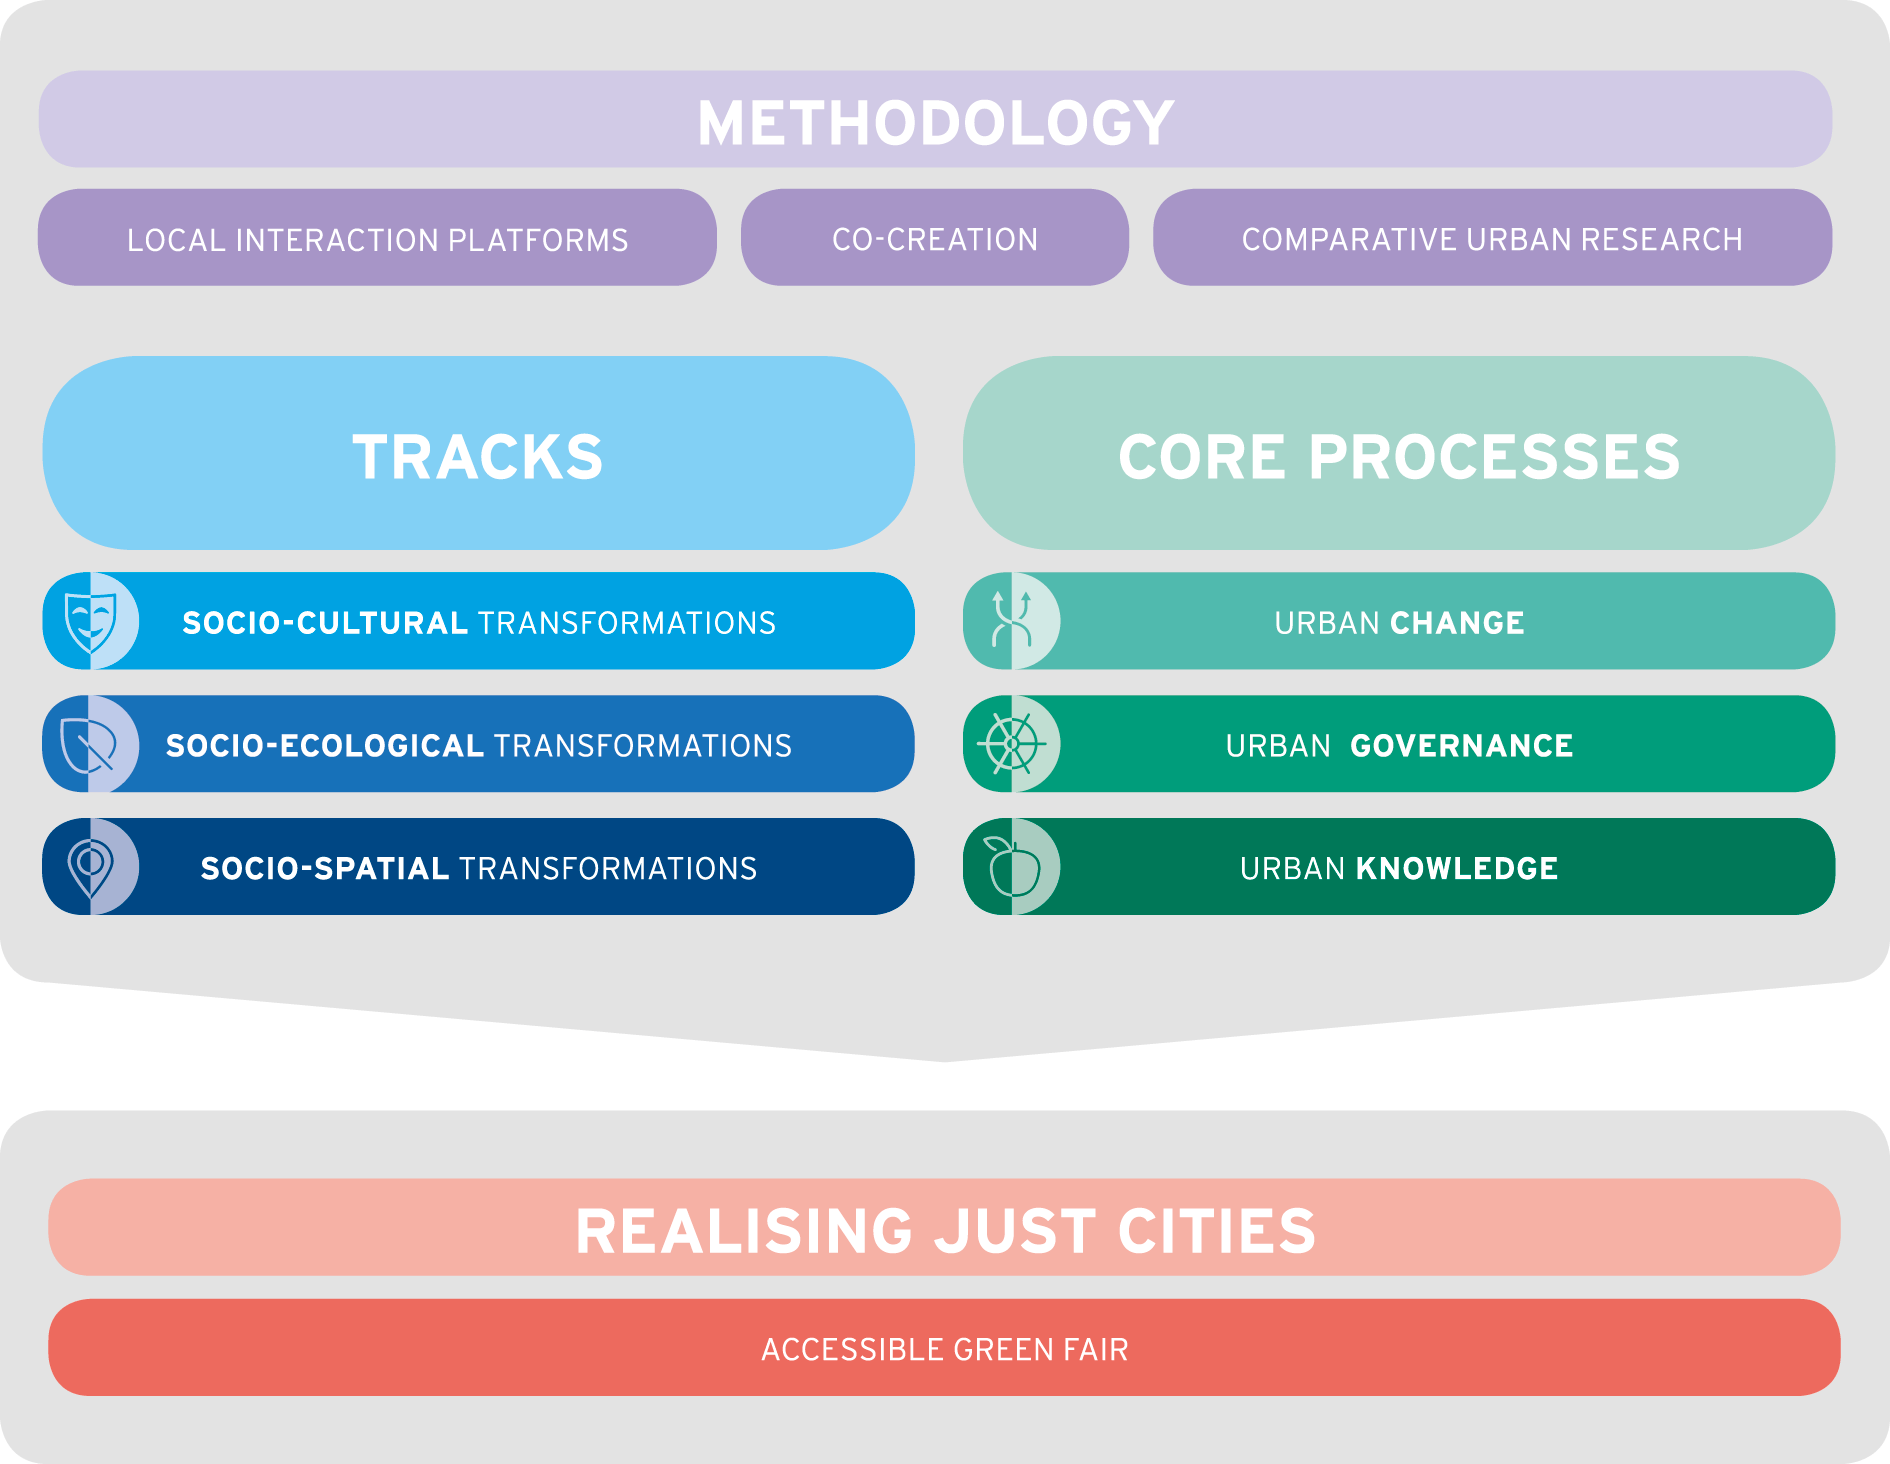 Research Framework